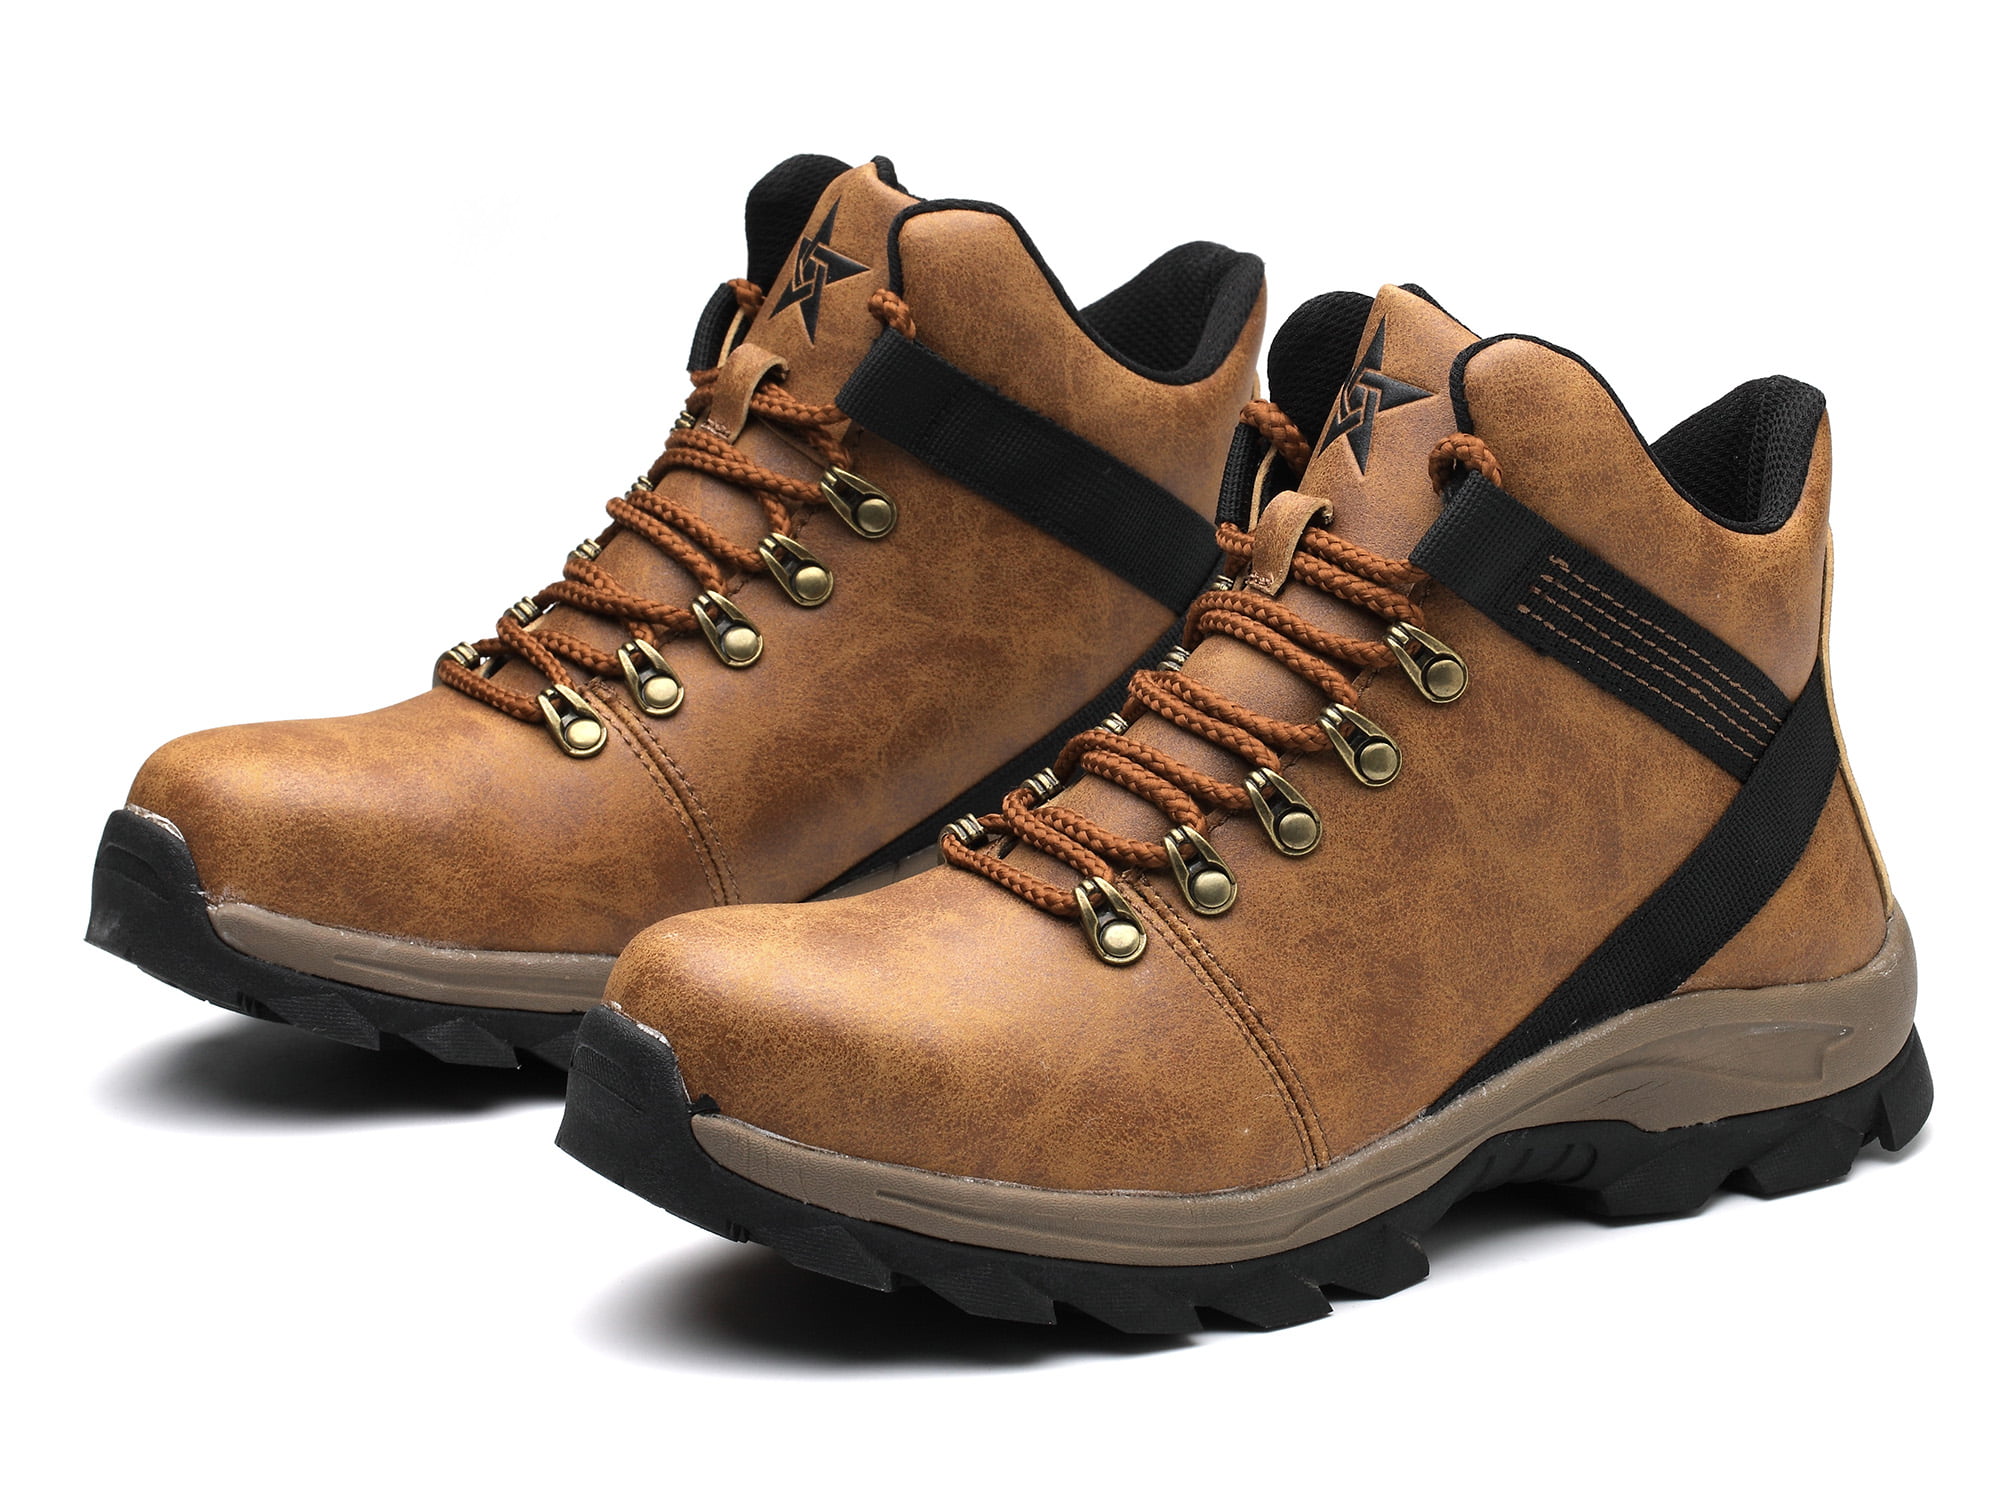 Men's Work Safety Shoes Steel Toe Boots Indestructible Bulletproof Outdoor Hiker 